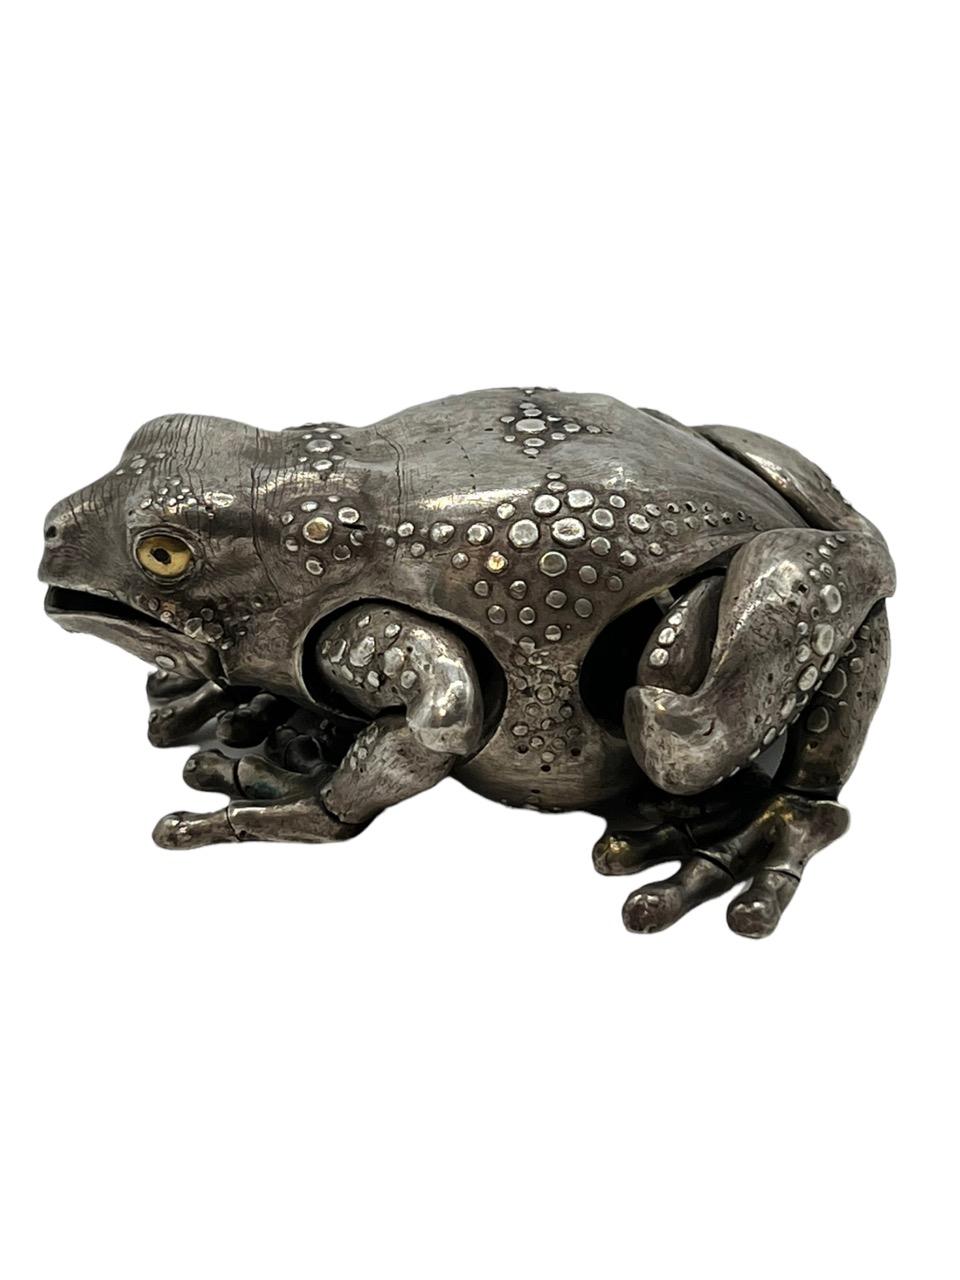 Oleg Konstantinov Fully Articulated Frog Made of Sterling Silver 2